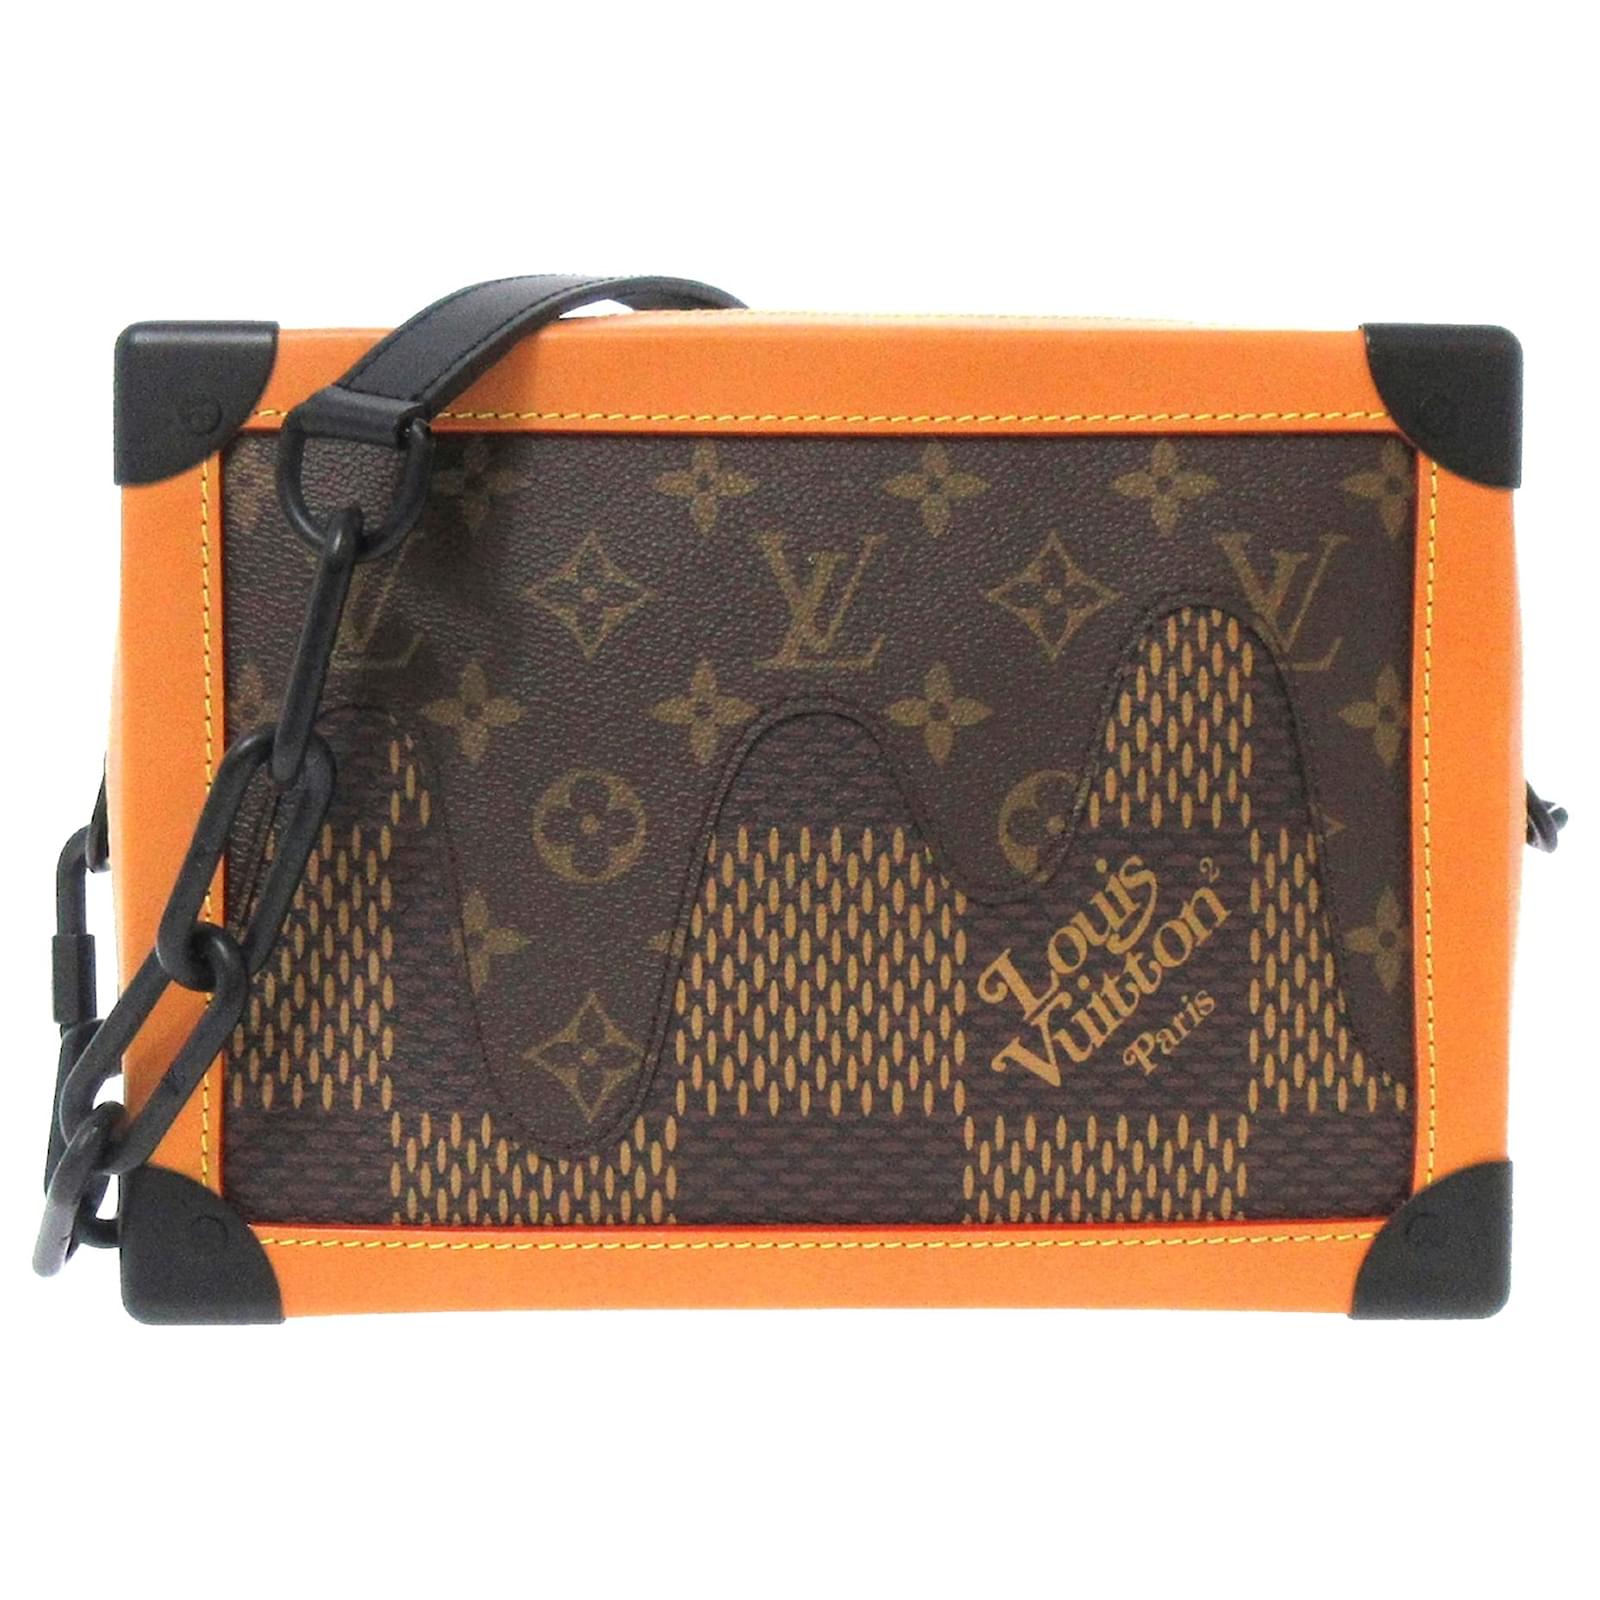 Louis Vuitton Soft Trunk Shoulder Bag in Orange Monogram Leather And